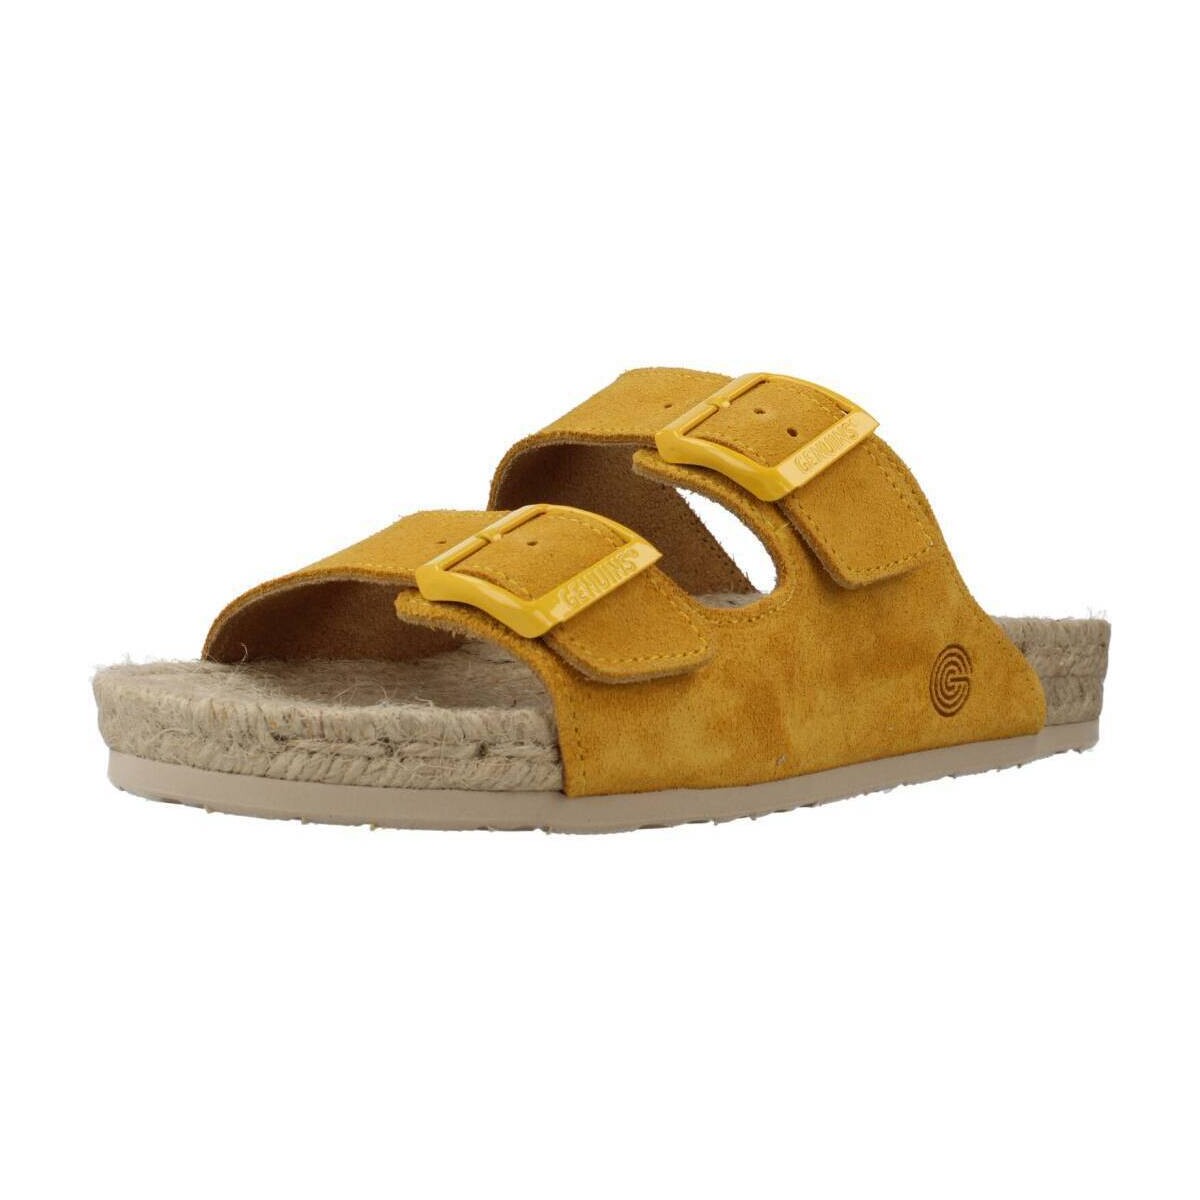 Schuhe Damen Sandalen / Sandaletten Genuins INCA Gelb